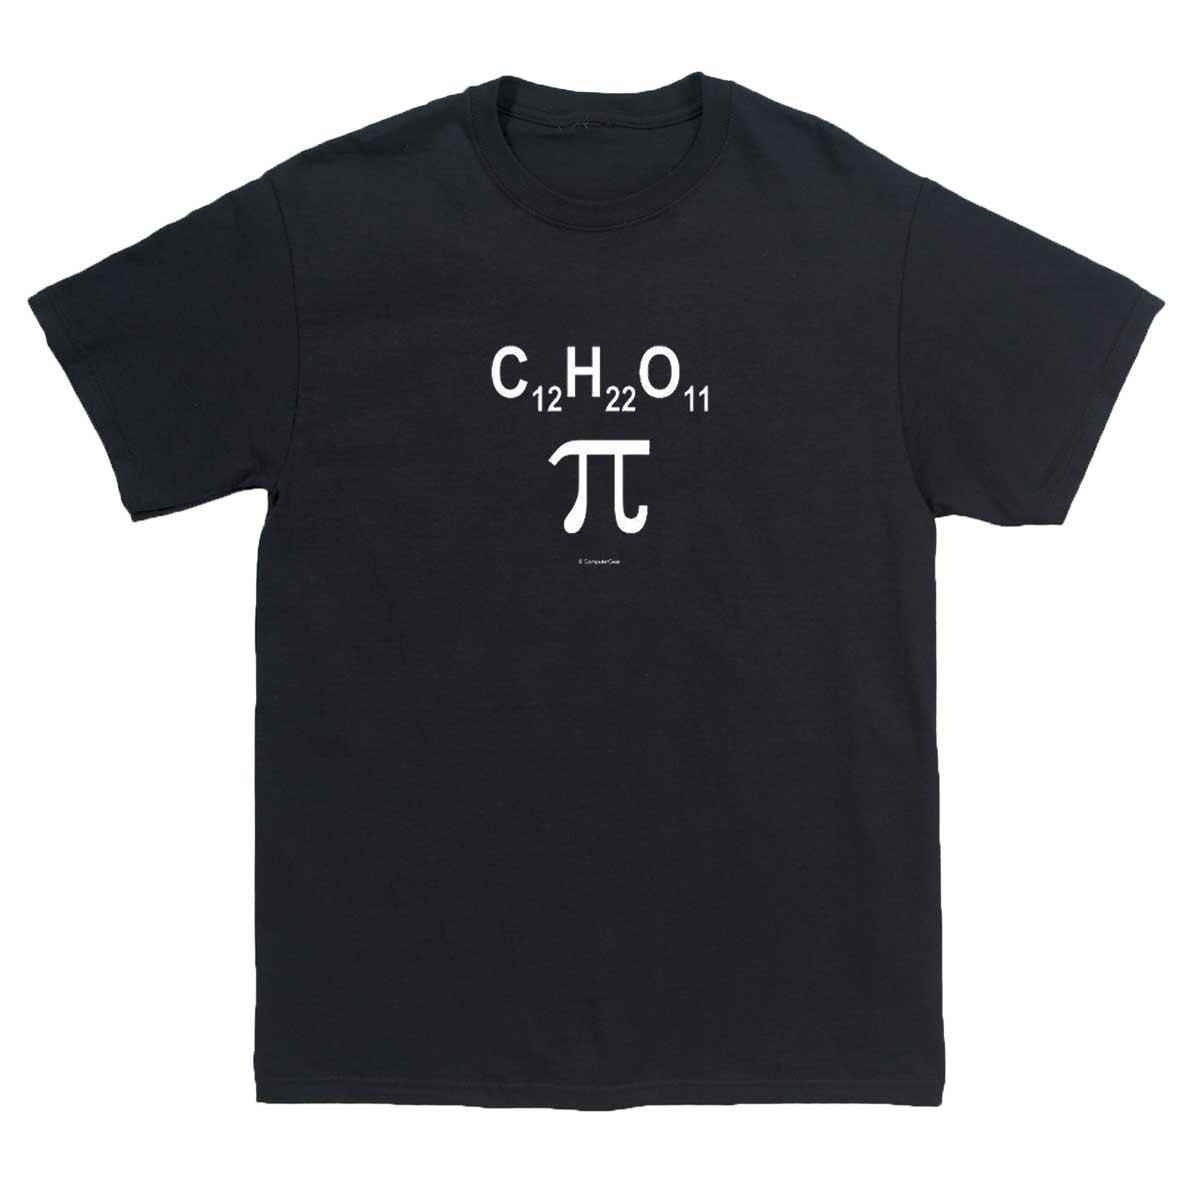 Pi Day Shirt Ideas
 Smart girls won t mind being called a Sugar Pi wearing